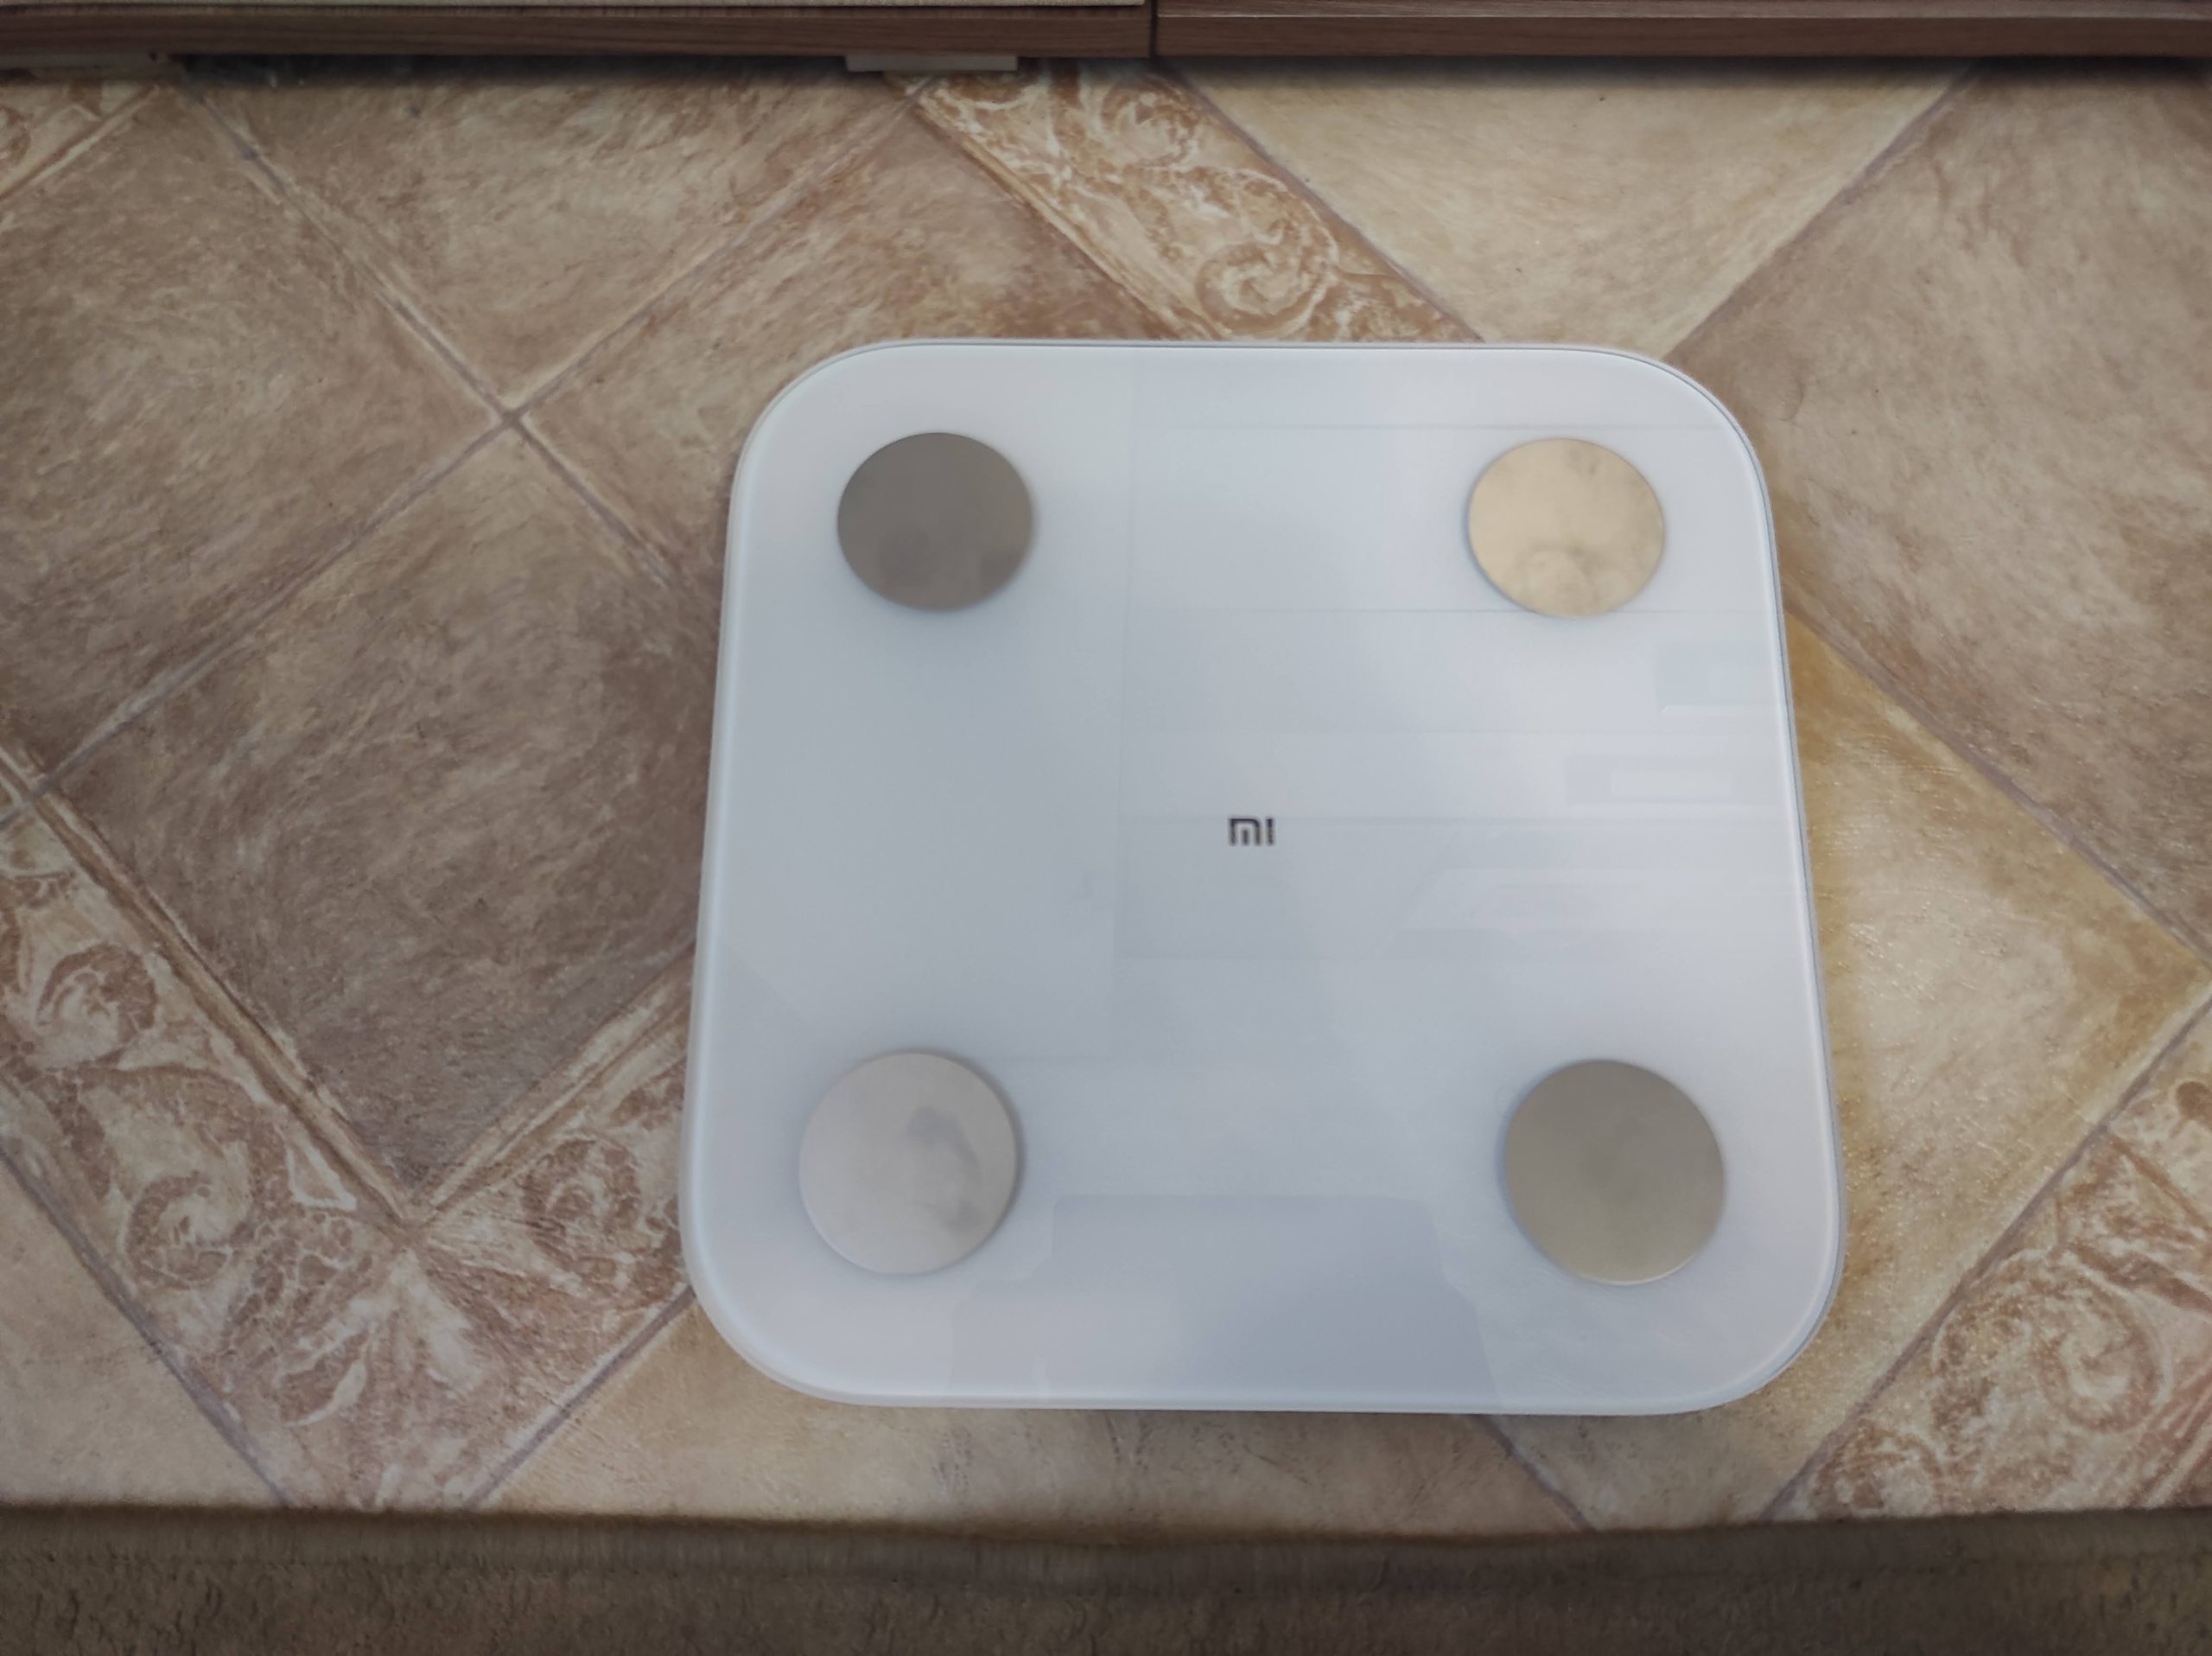 Xiaomi Весы Scale 2 Обзор